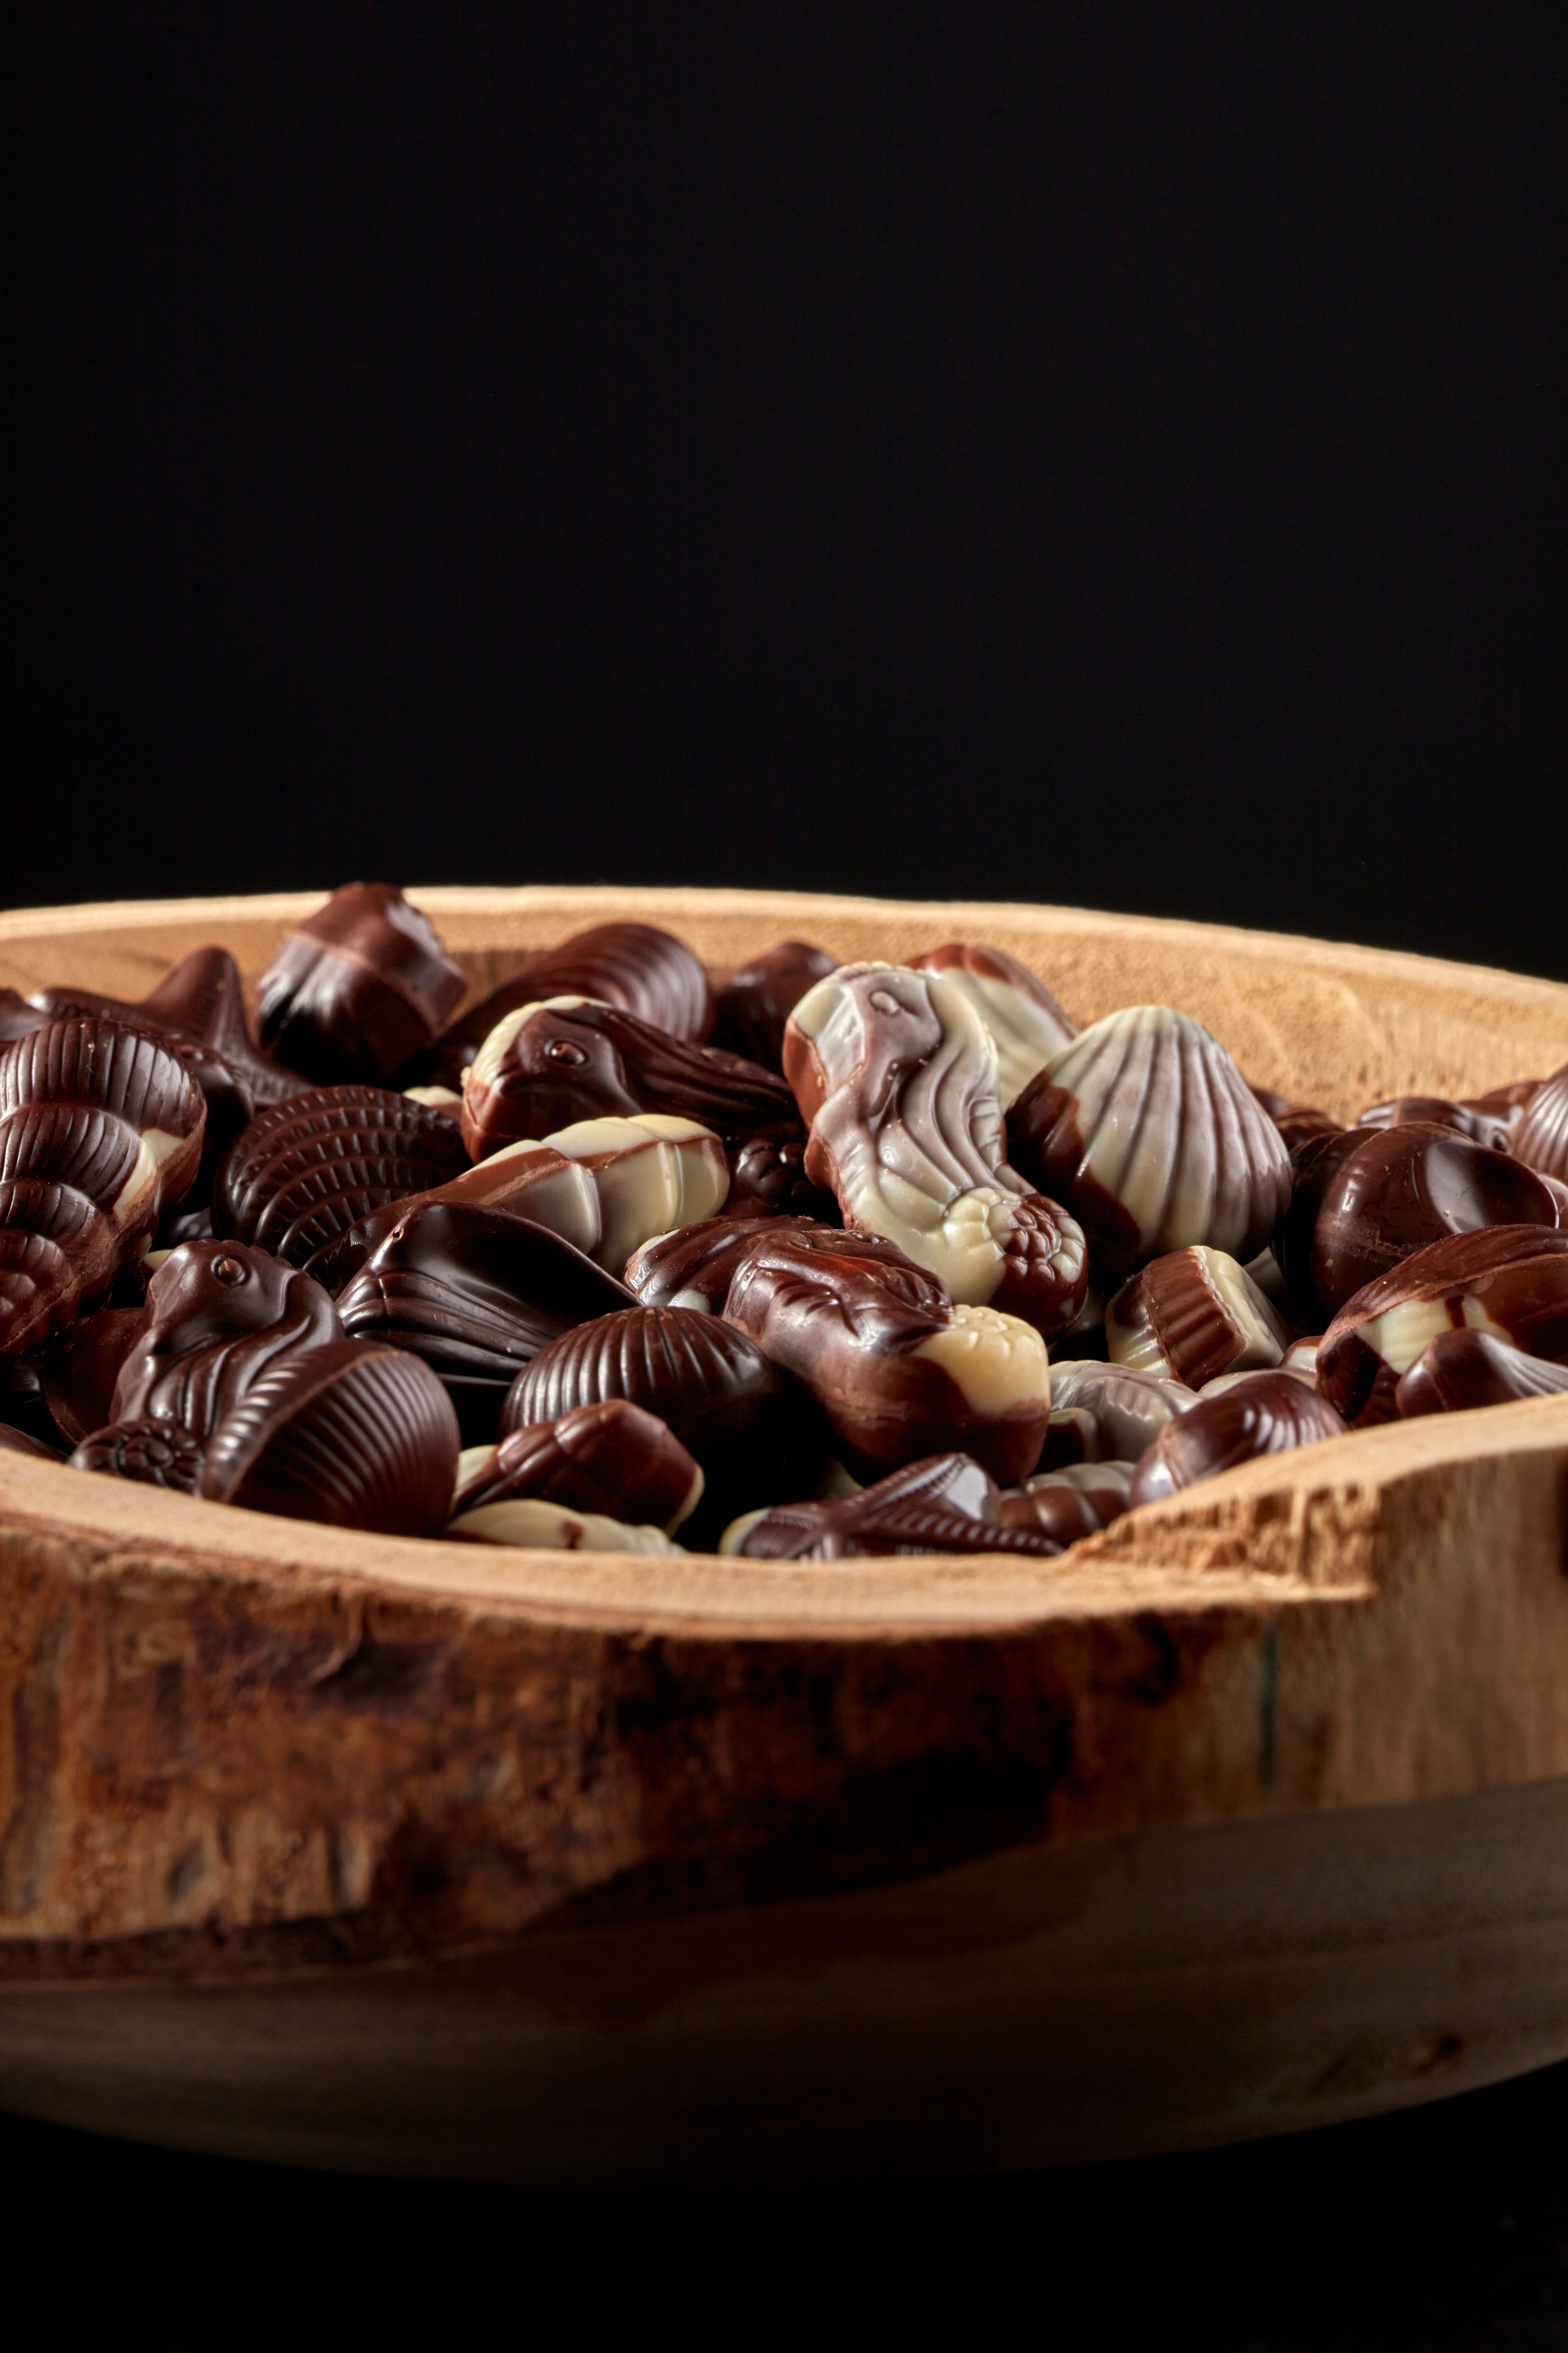 202302-belgian-chocolat-truffel-0974-belgianchocolategroup.jpg